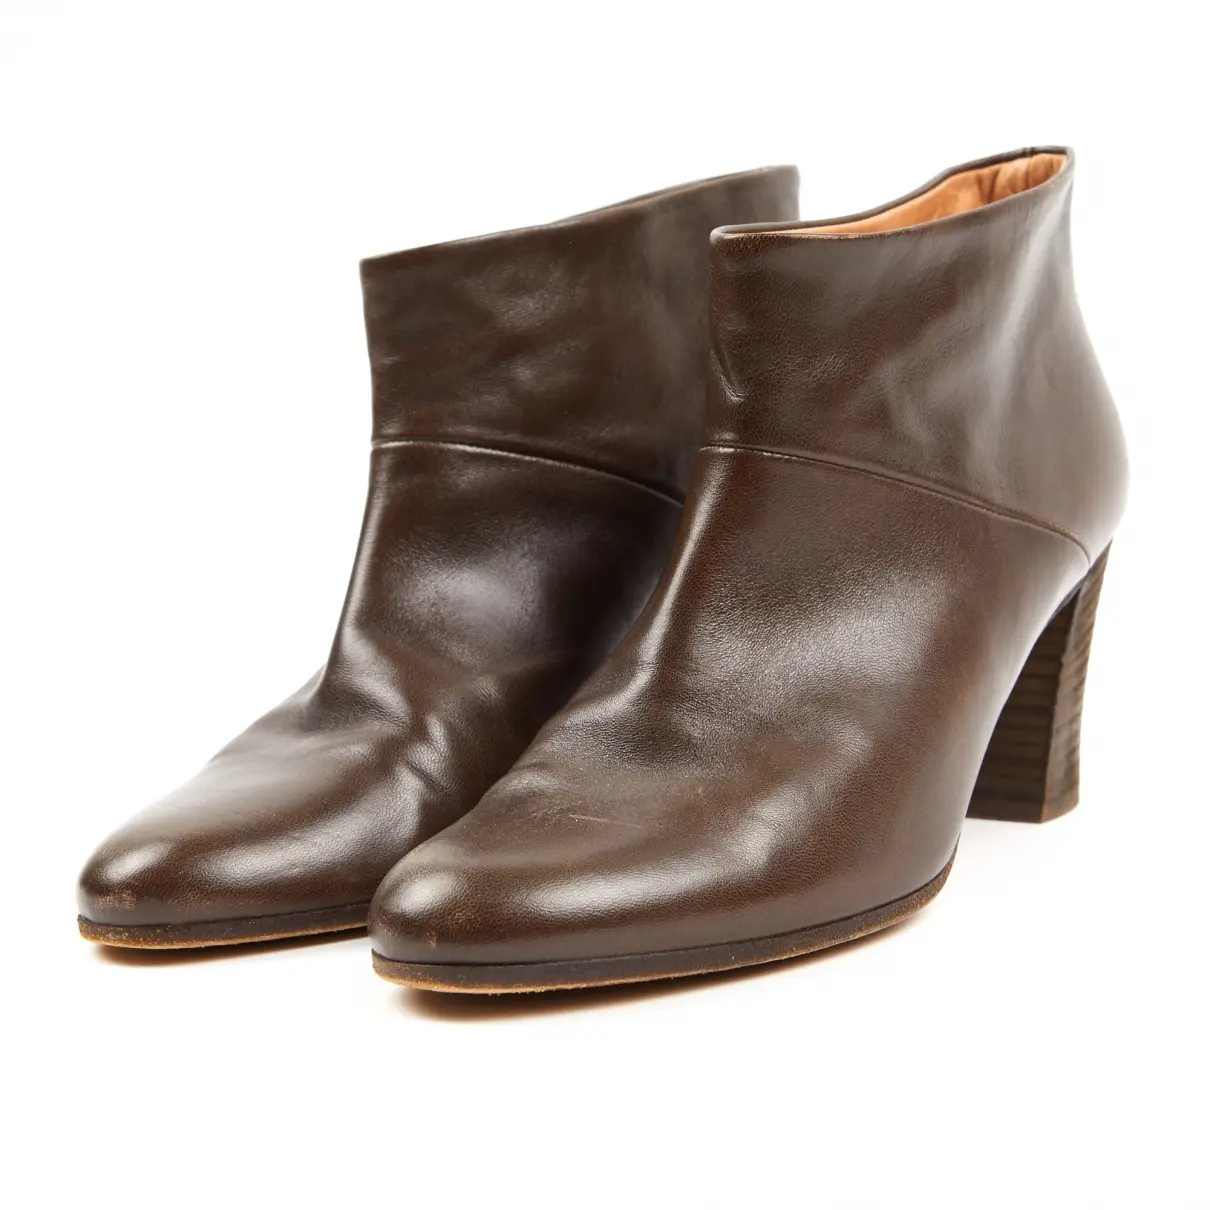 Maison Martin Margiela Leather boots for sale